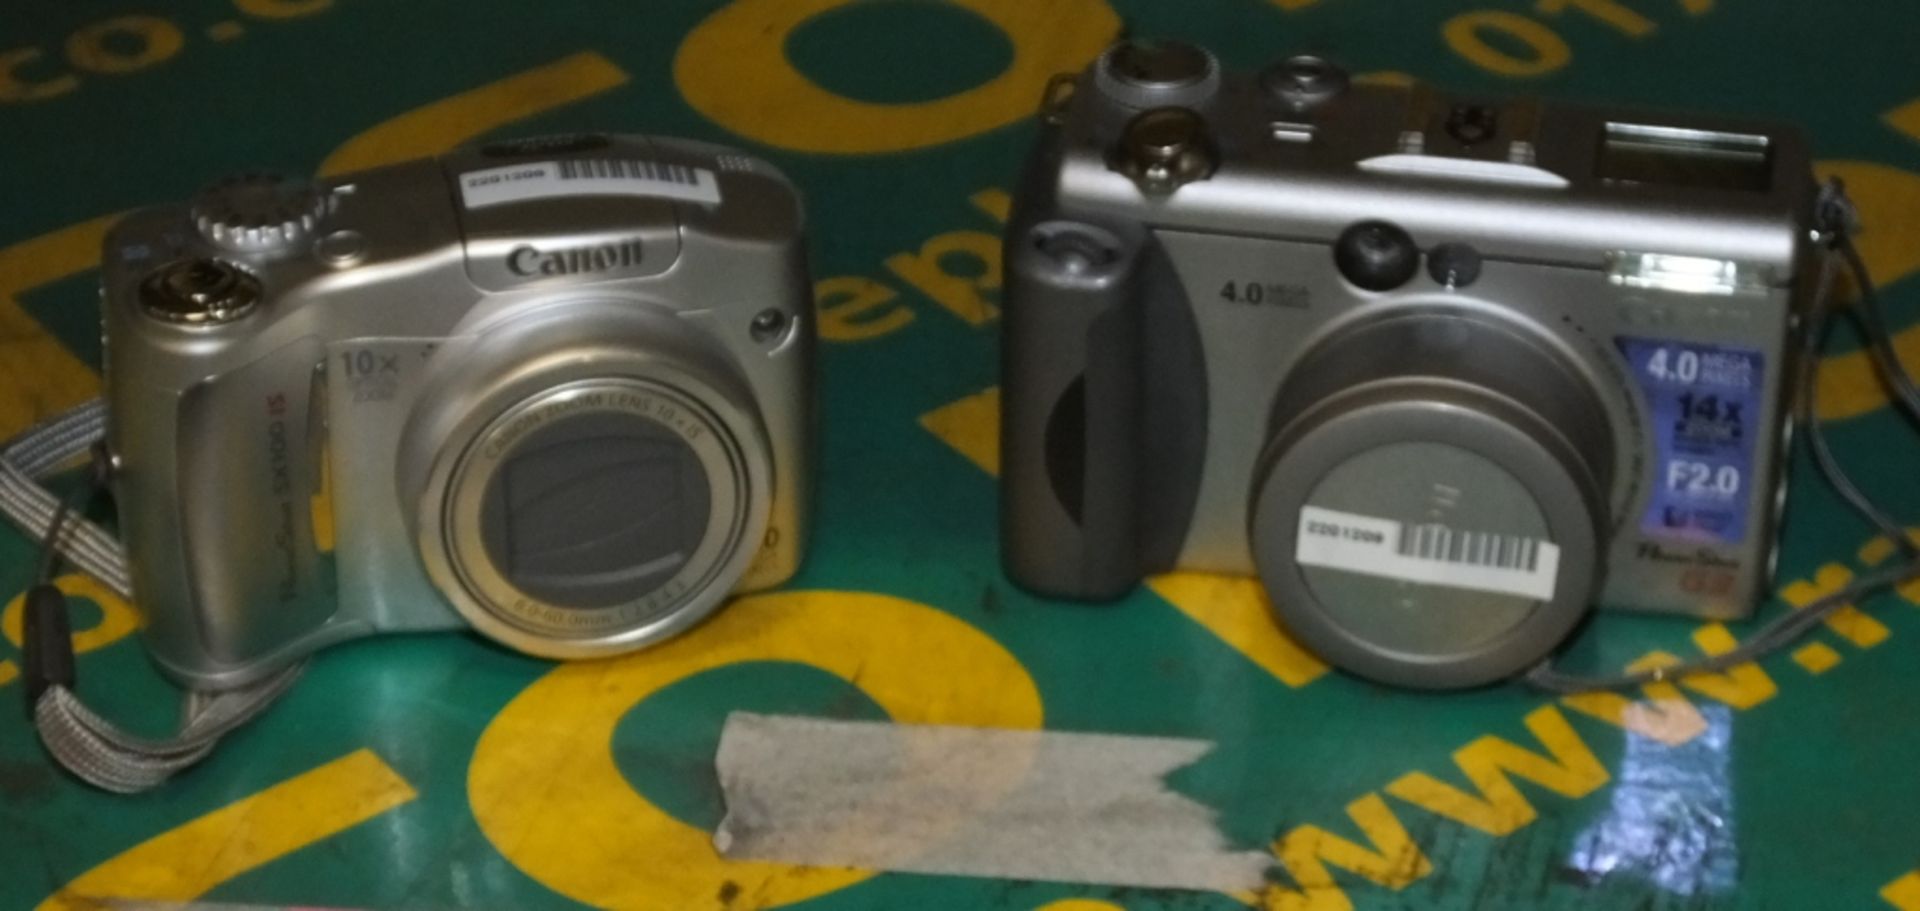 Canon power Shot SX 100IS Digtal Camera, Canon power Shot G 3 Digtal Camera, Nikon Coolpix - Image 2 of 3